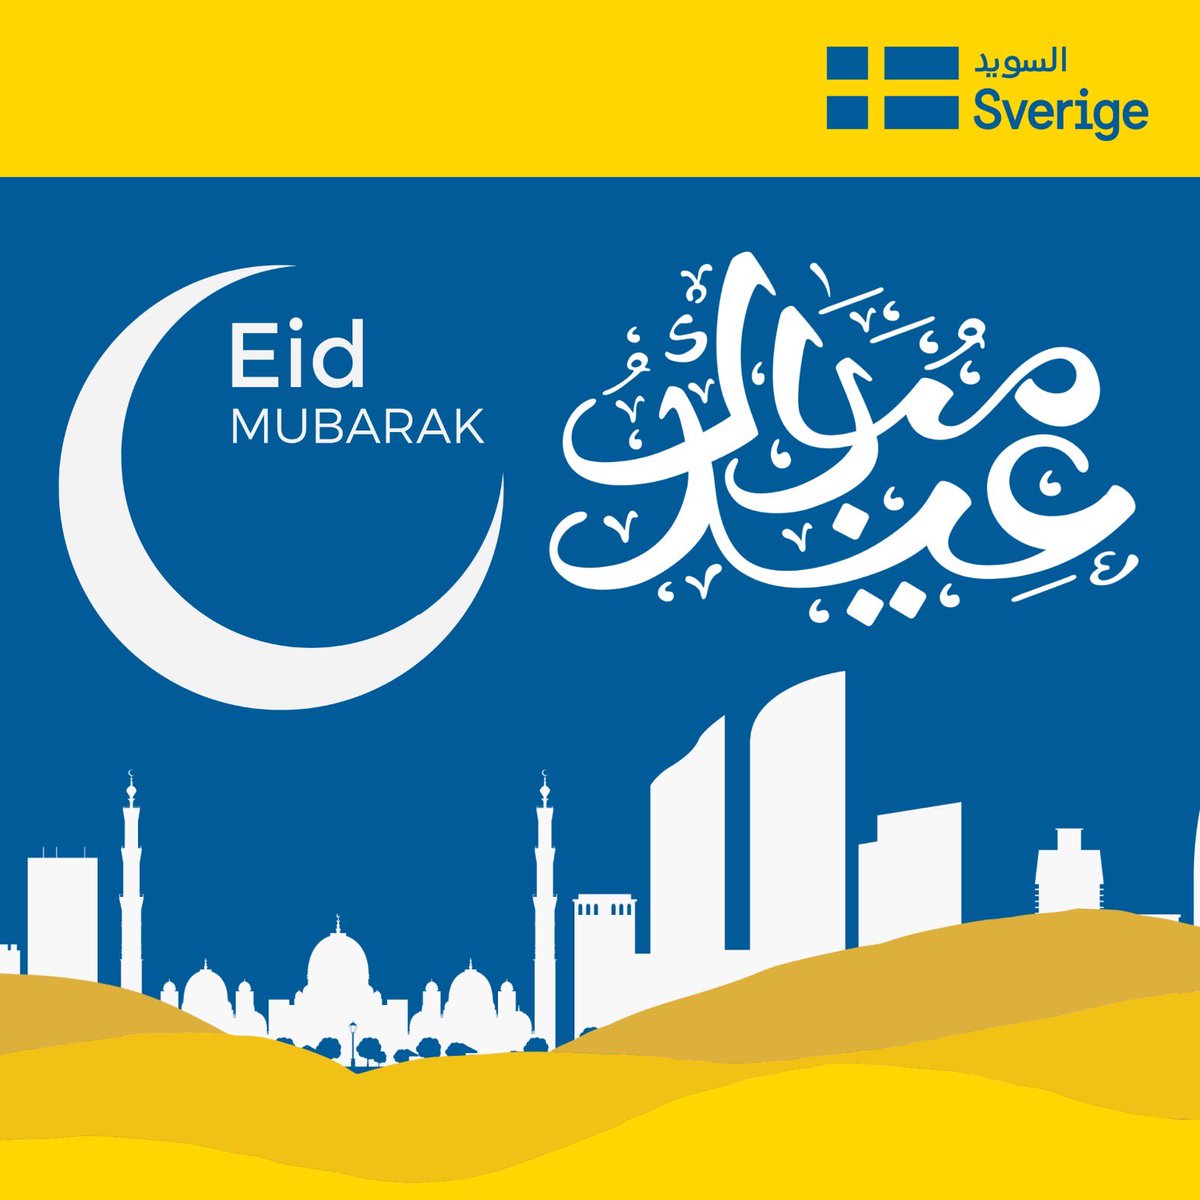 The Embassy wishes all the people of the United Arab Emirates and everyone around the world a joyful Eid and #EidMubarak. #عيد_مبارك